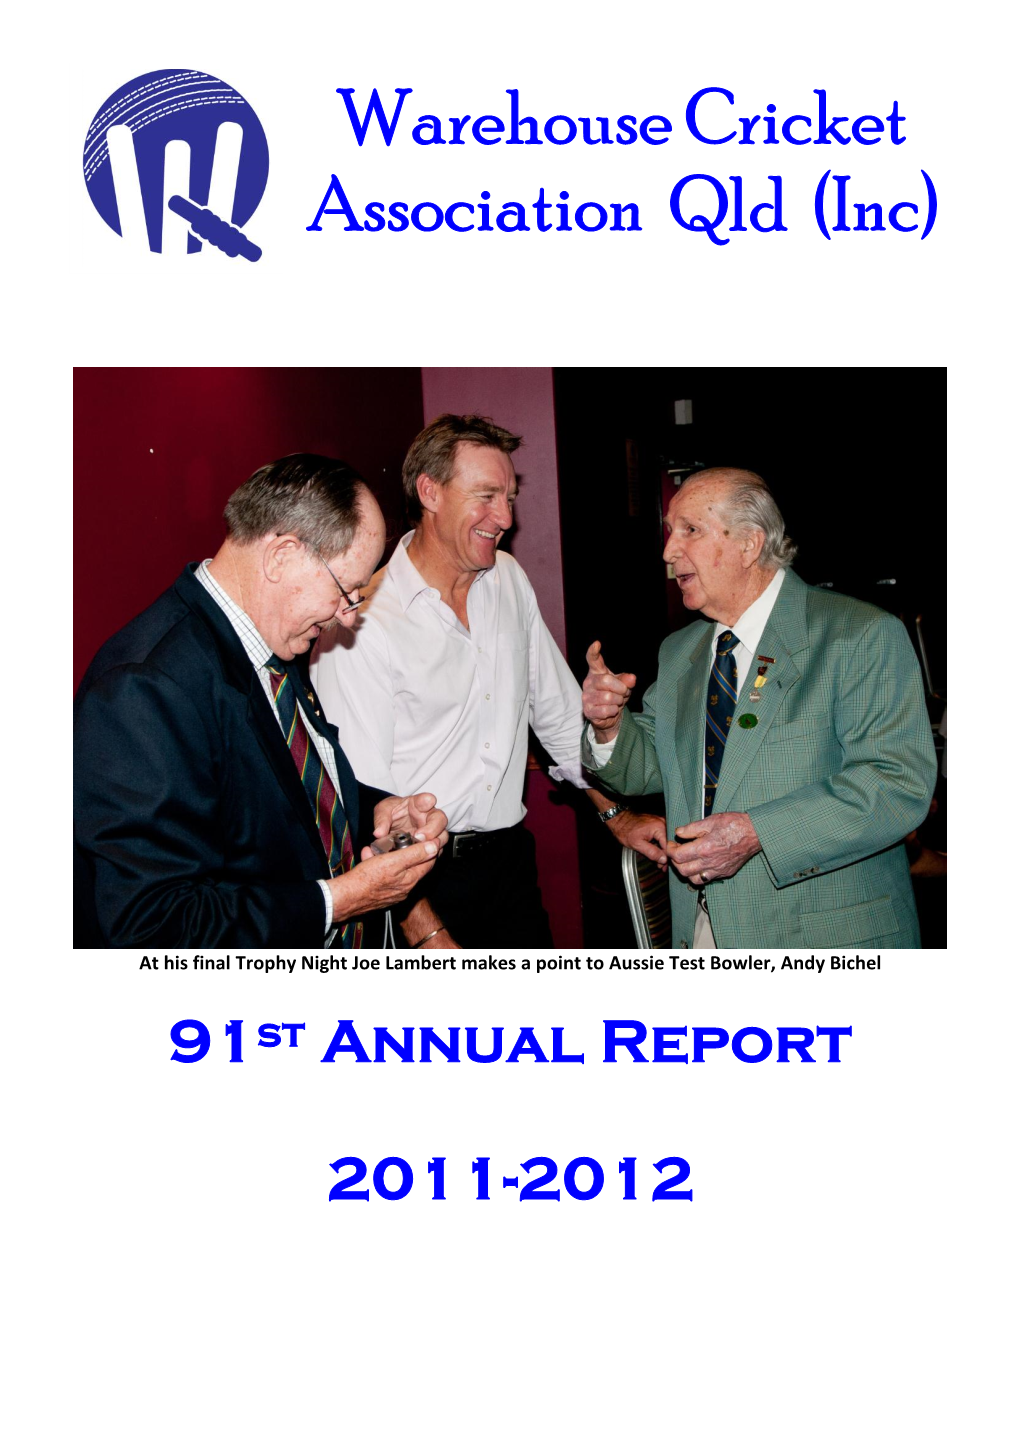 Annual Report 2011/2012